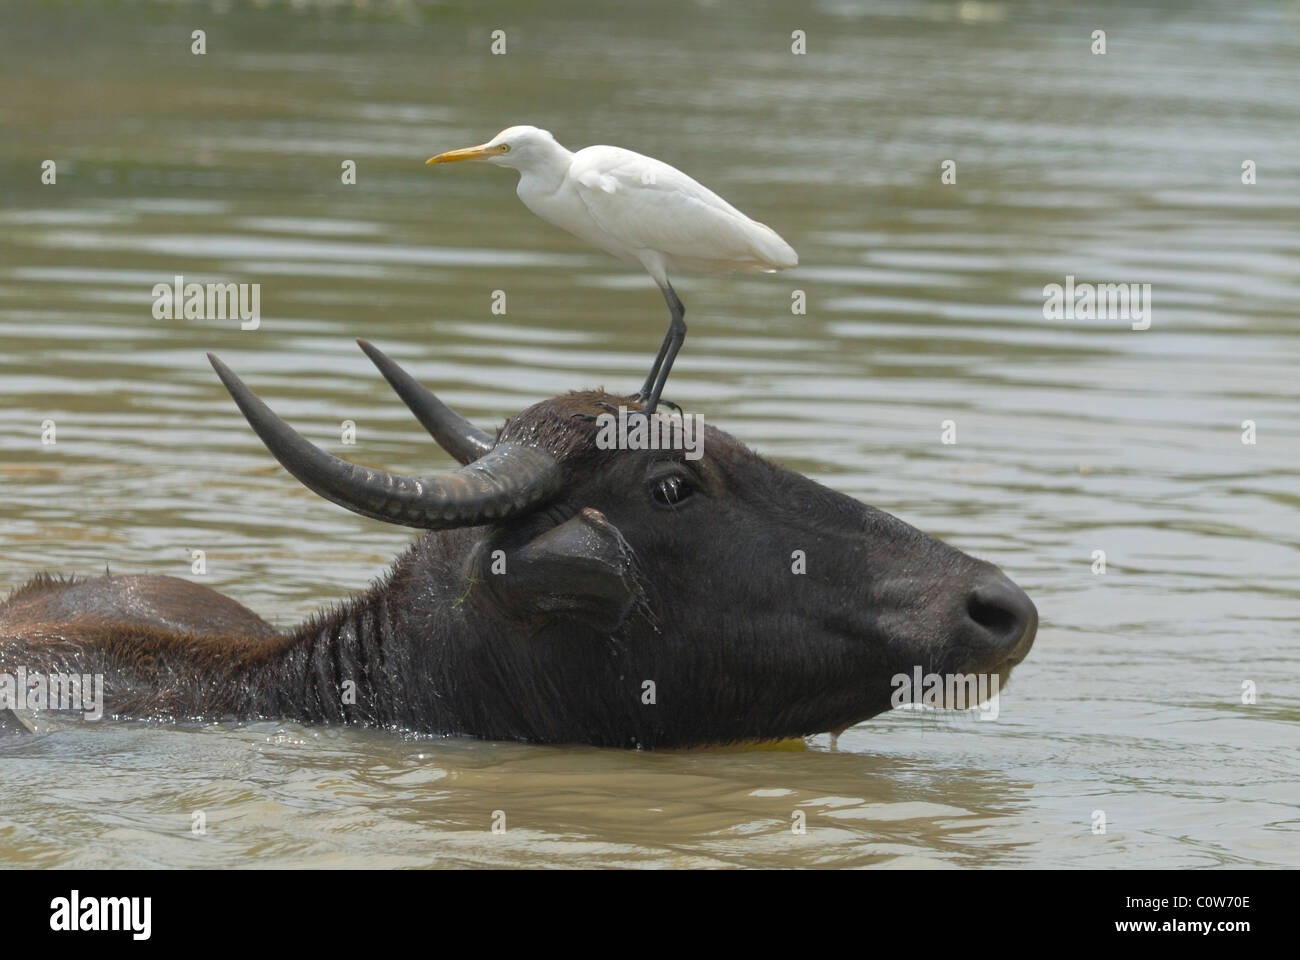 Cattle Egret standing on a Water Buffalo's head, Sri Lanka Stock Photo